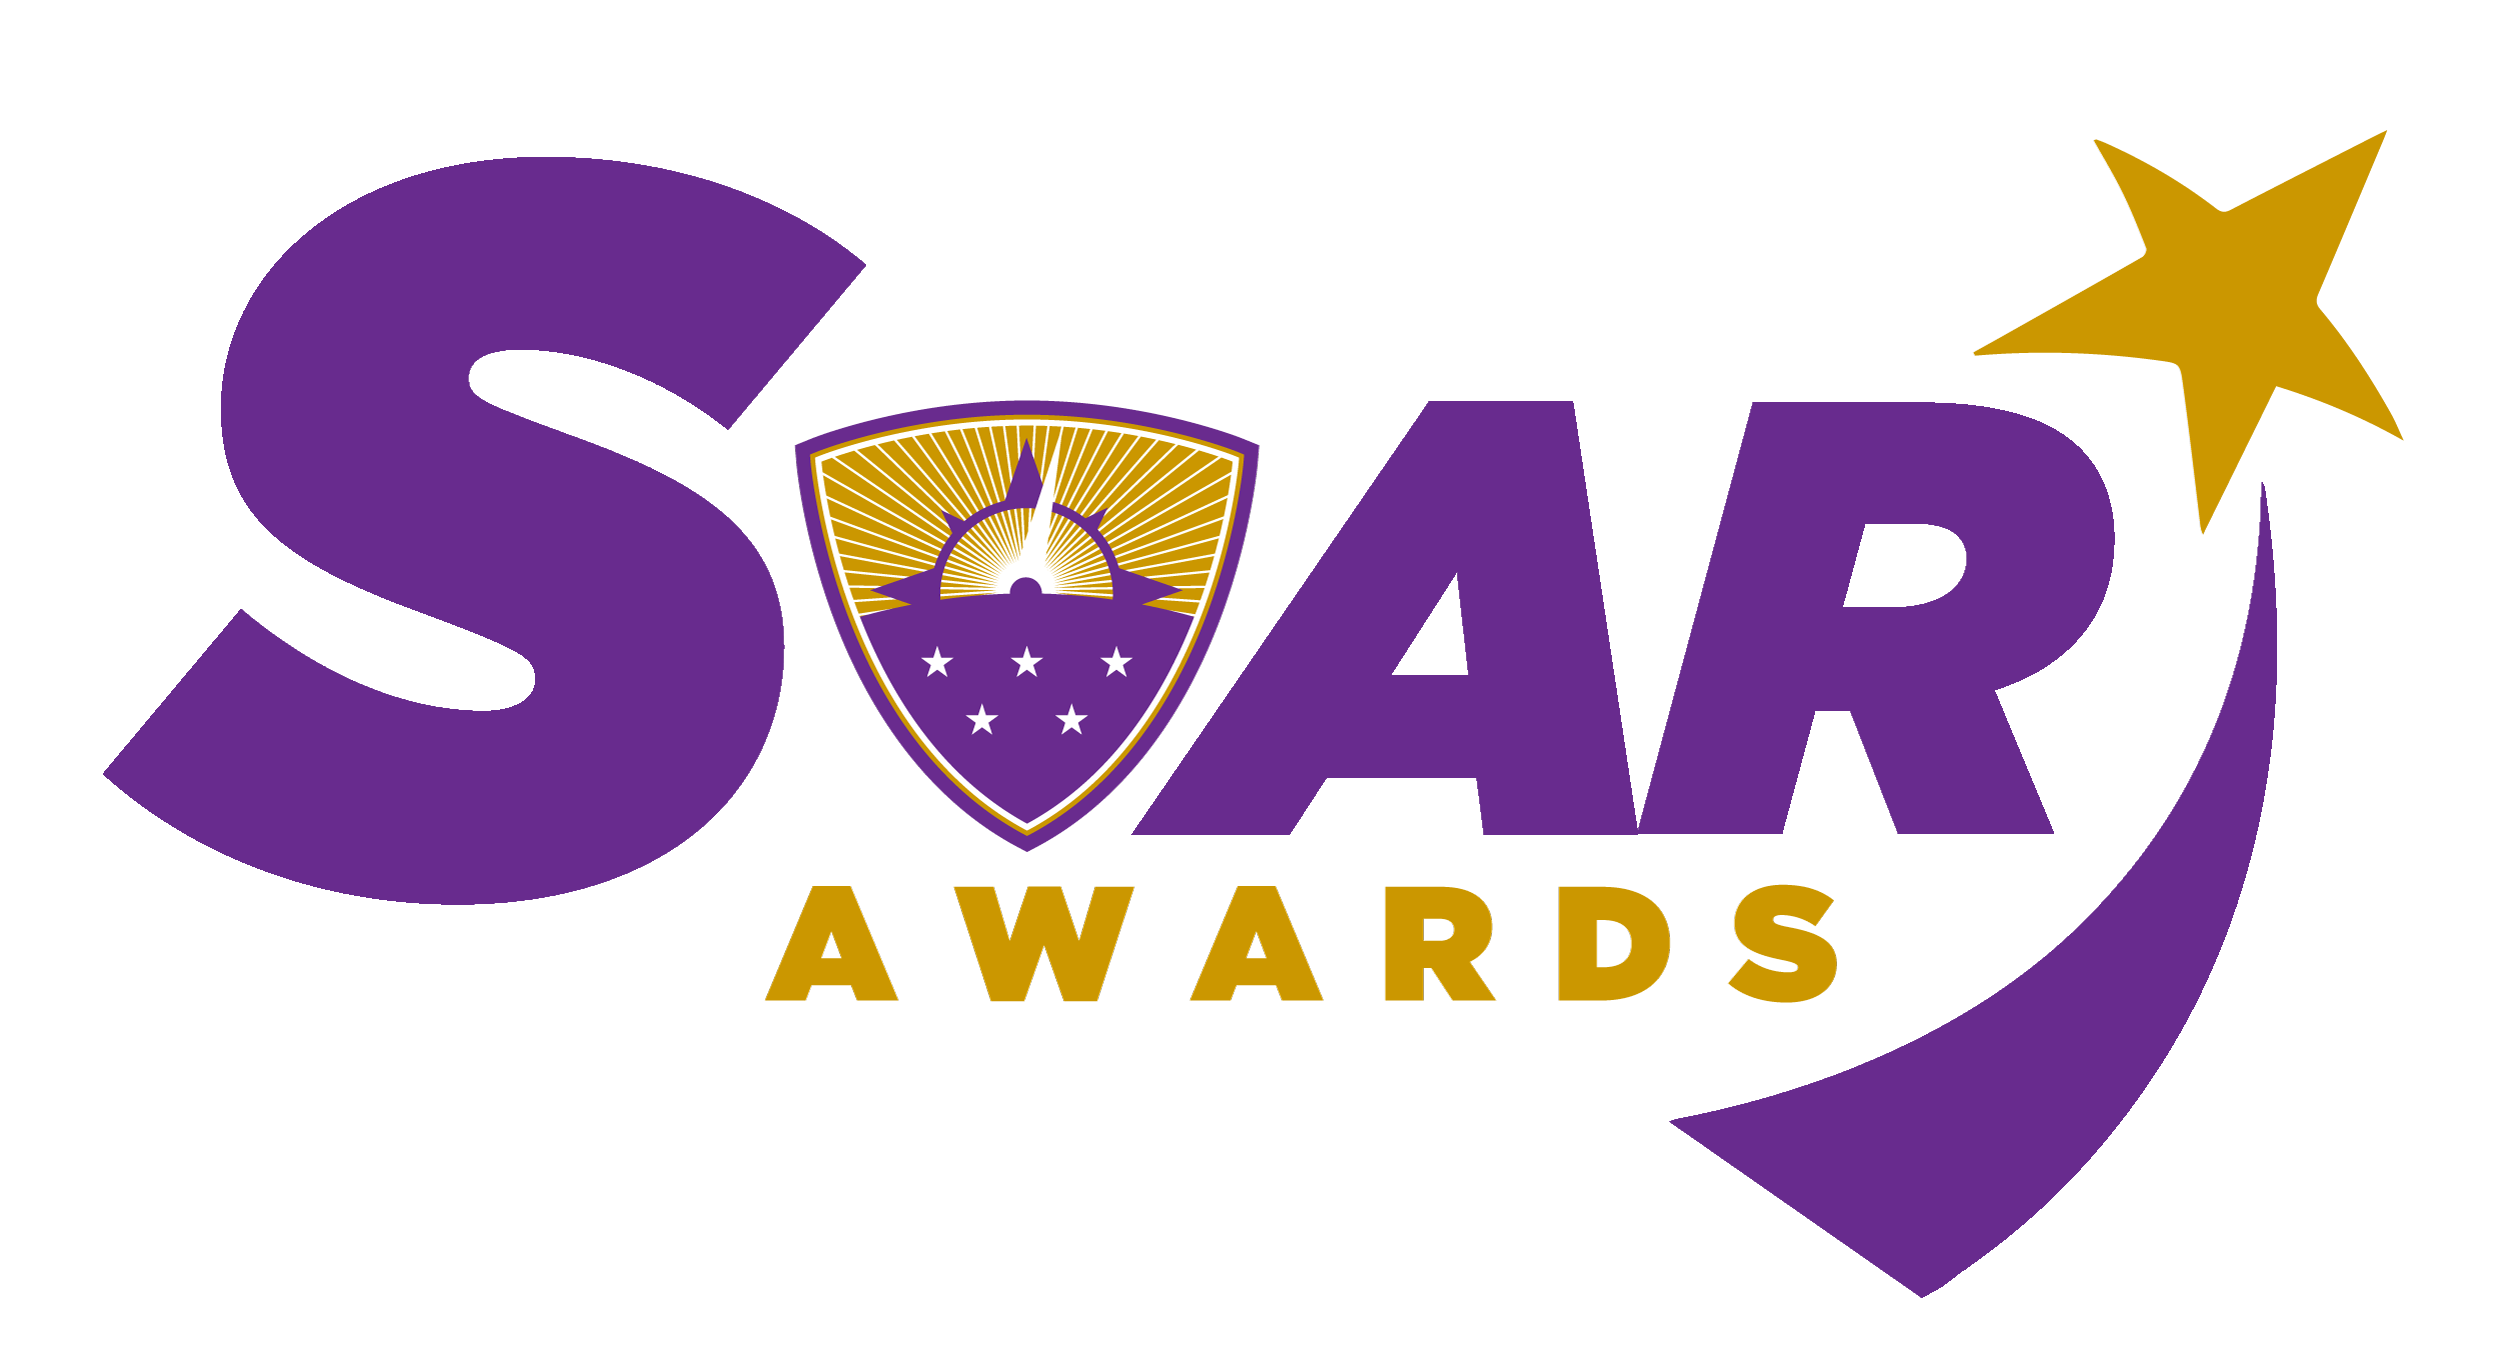 SOAR Awards logo